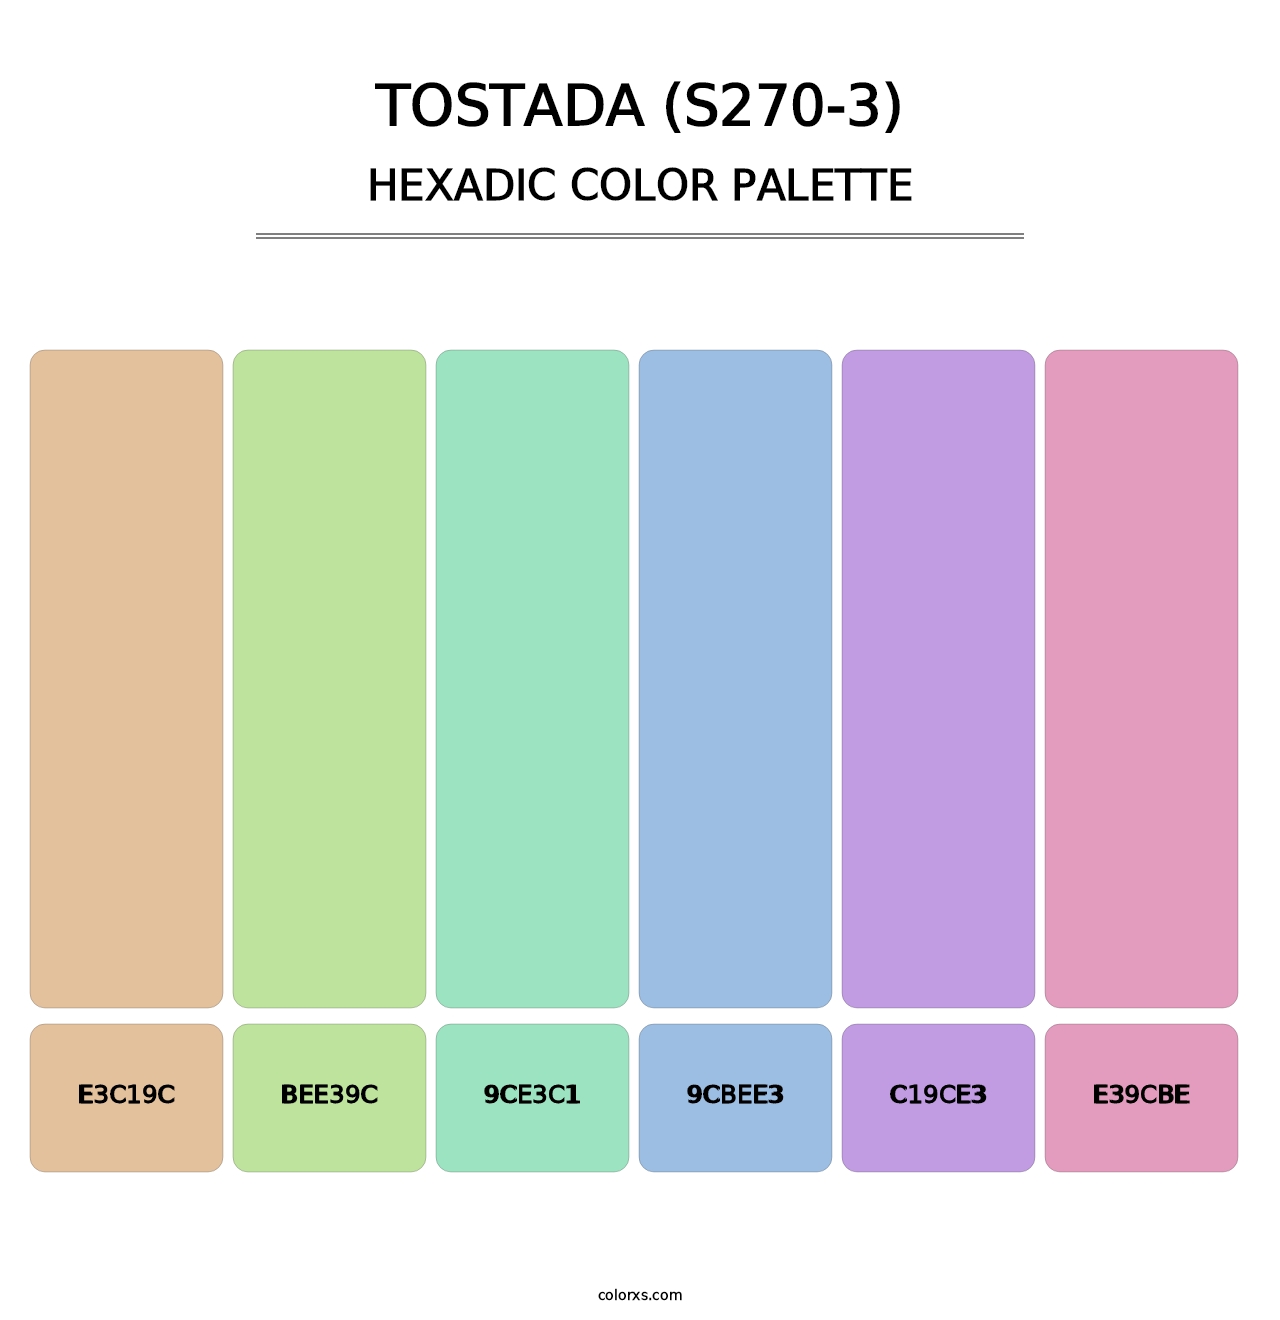 Tostada (S270-3) - Hexadic Color Palette